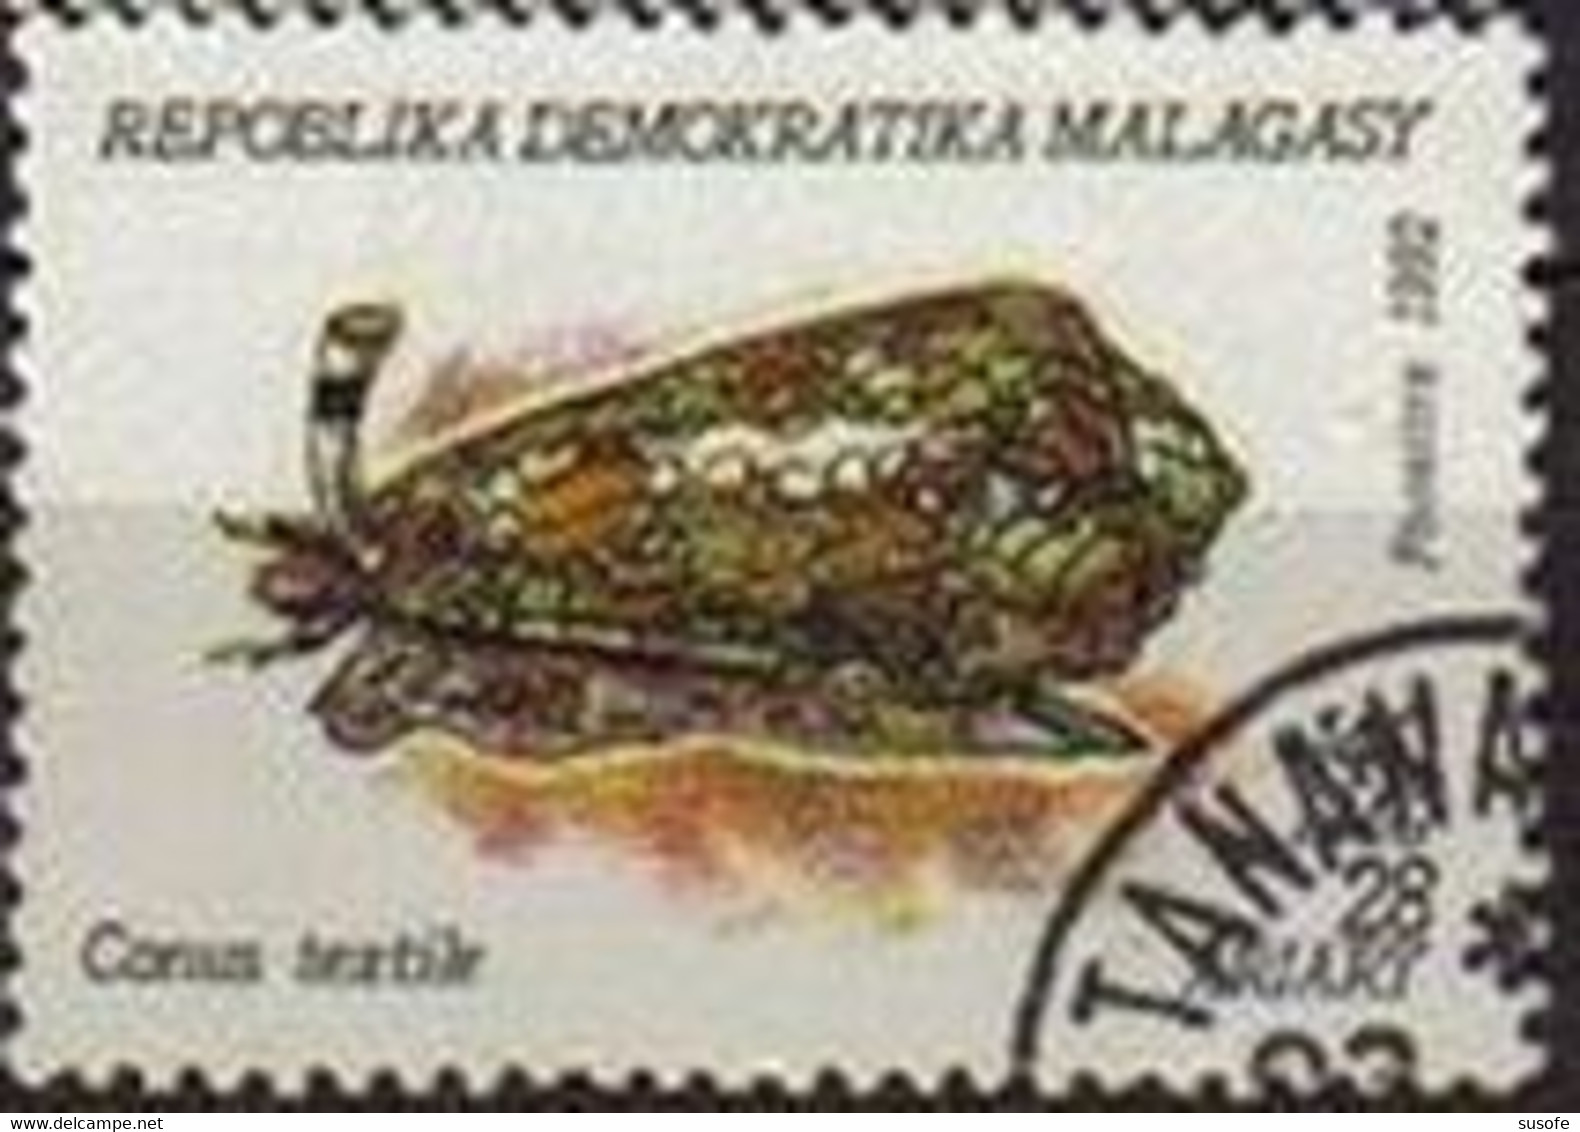 Madagascar 1993 Scott 1125 Sello * Fauna Moluscos Textile Cone (Conus Textile) Michel 1419 Yvert 1154 Malagasy Stamps - Madagascar (1960-...)